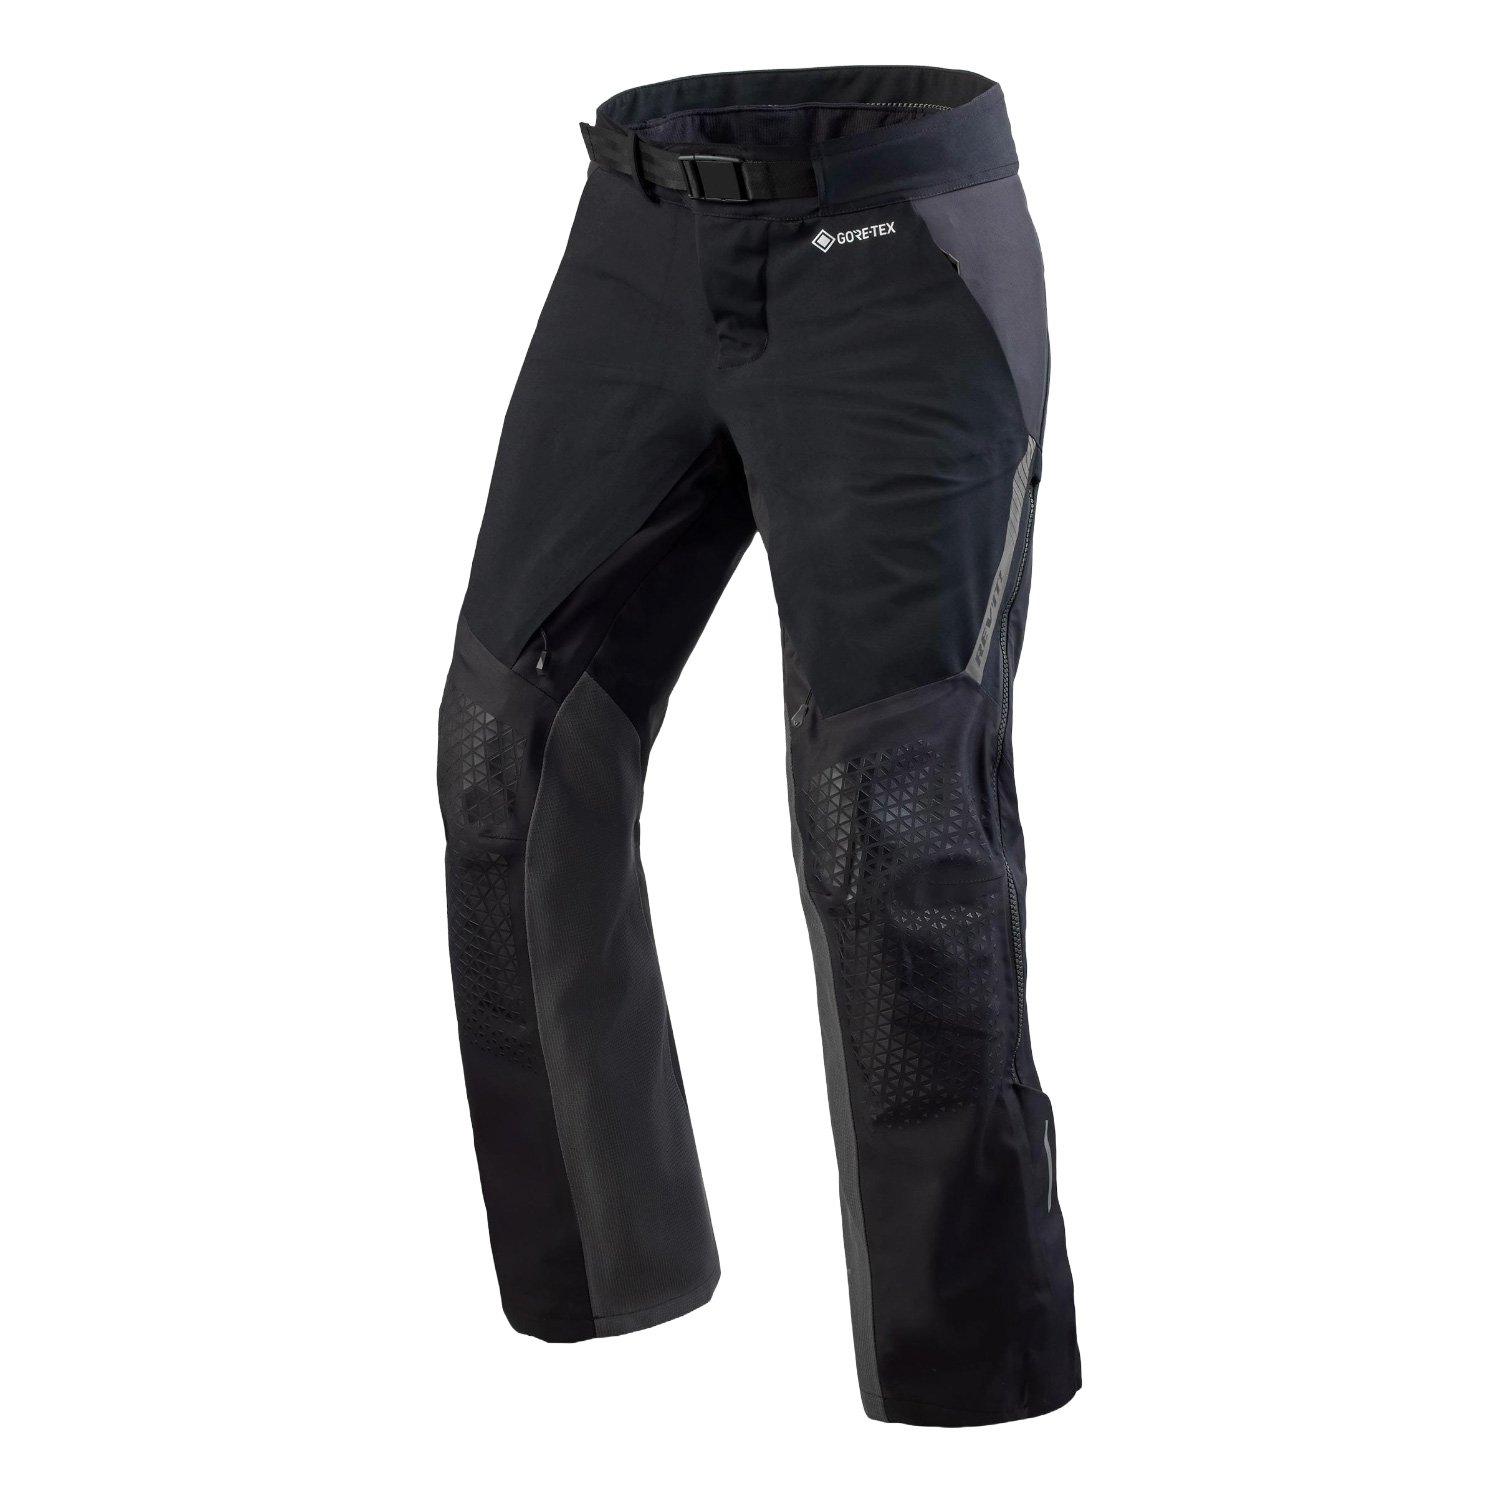 Image of REV'IT! Stratum GTX Black Grey Standard Motorcycle Pants Size 3XL ID 8700001351171